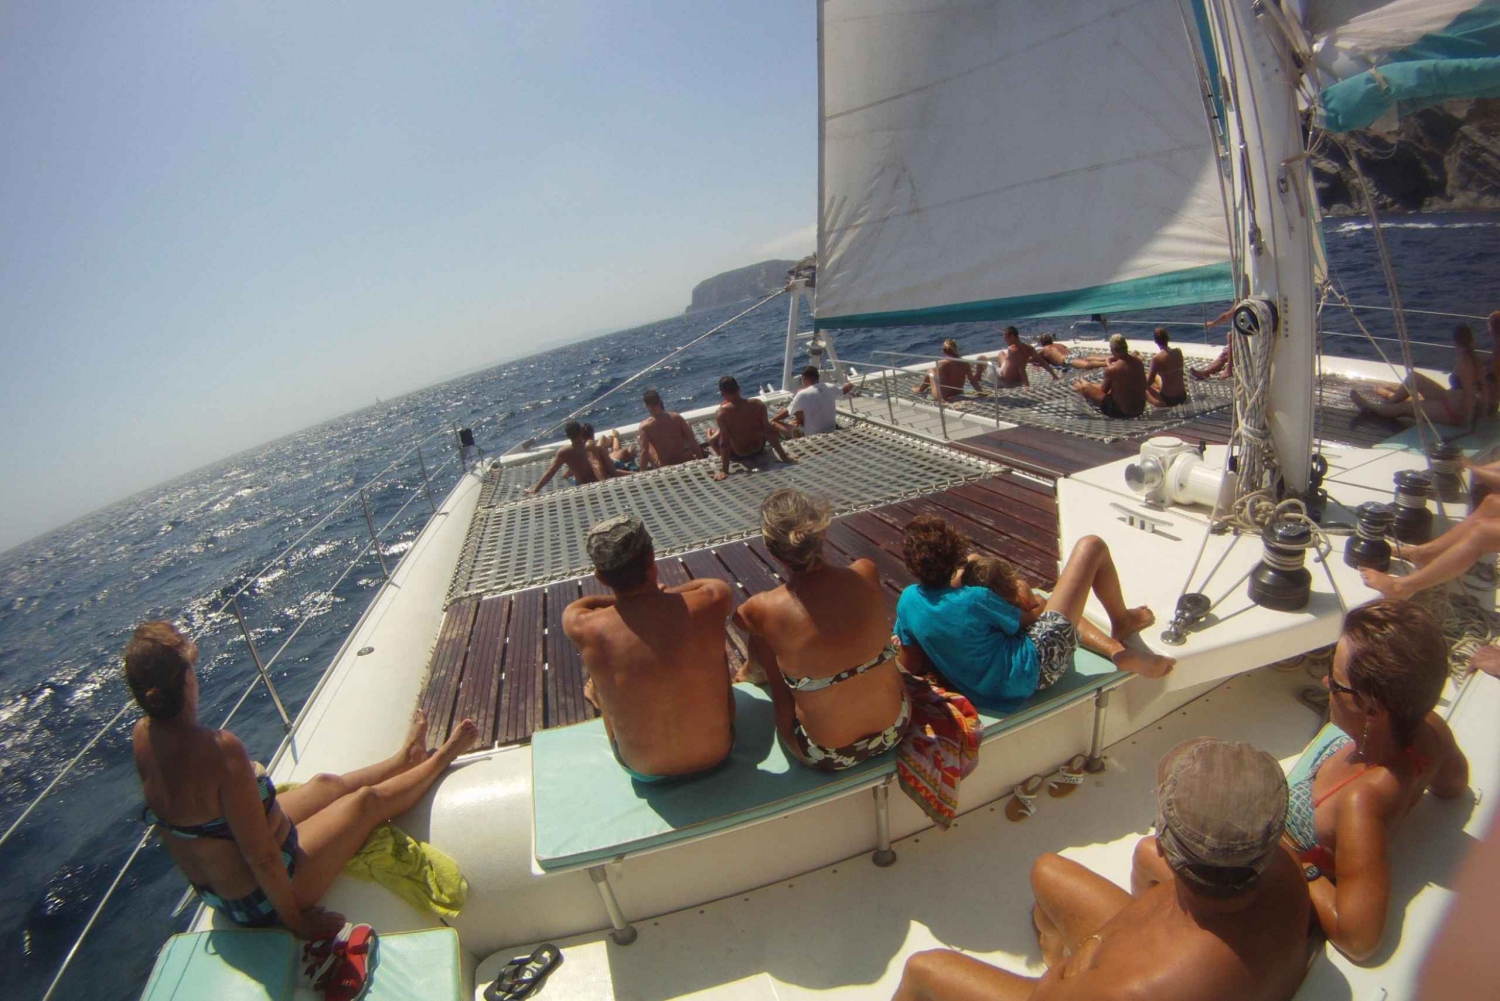 From Palma de Mallorca: Boat Cruise to Illetes